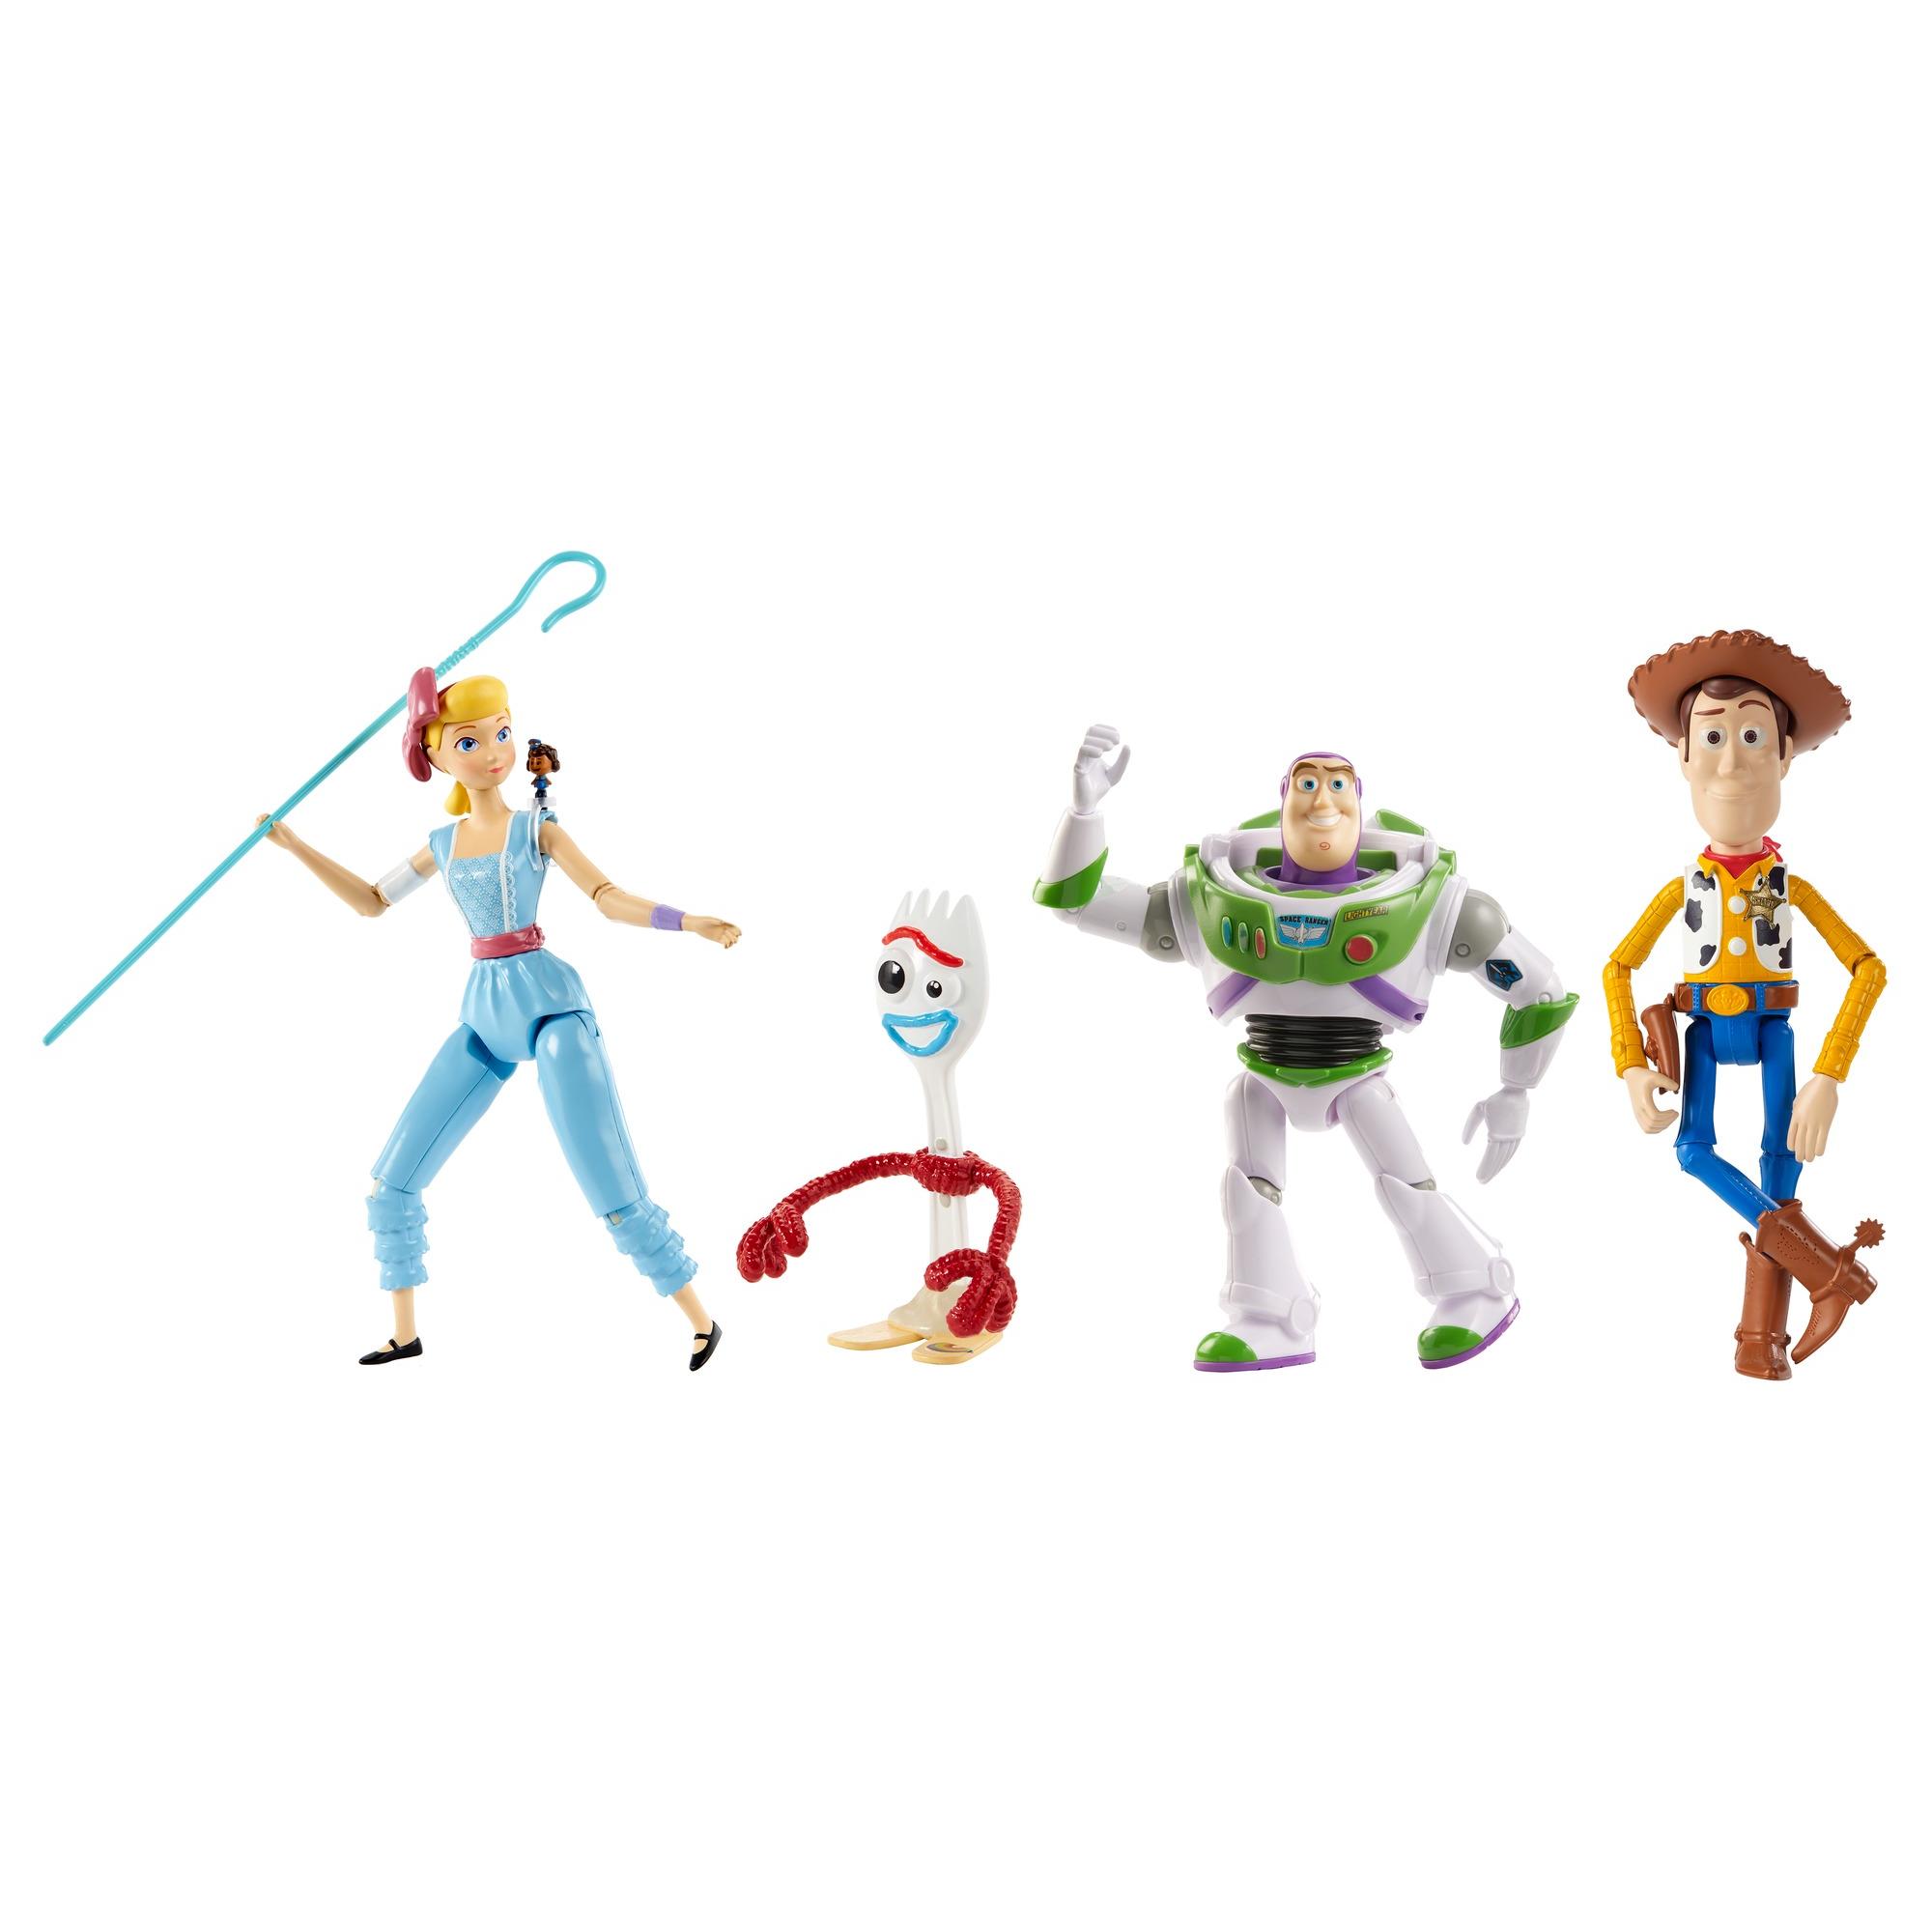 Disney Pixar Toy Story 4 Adventure Multi-Figure 4-Pack - image 4 of 5